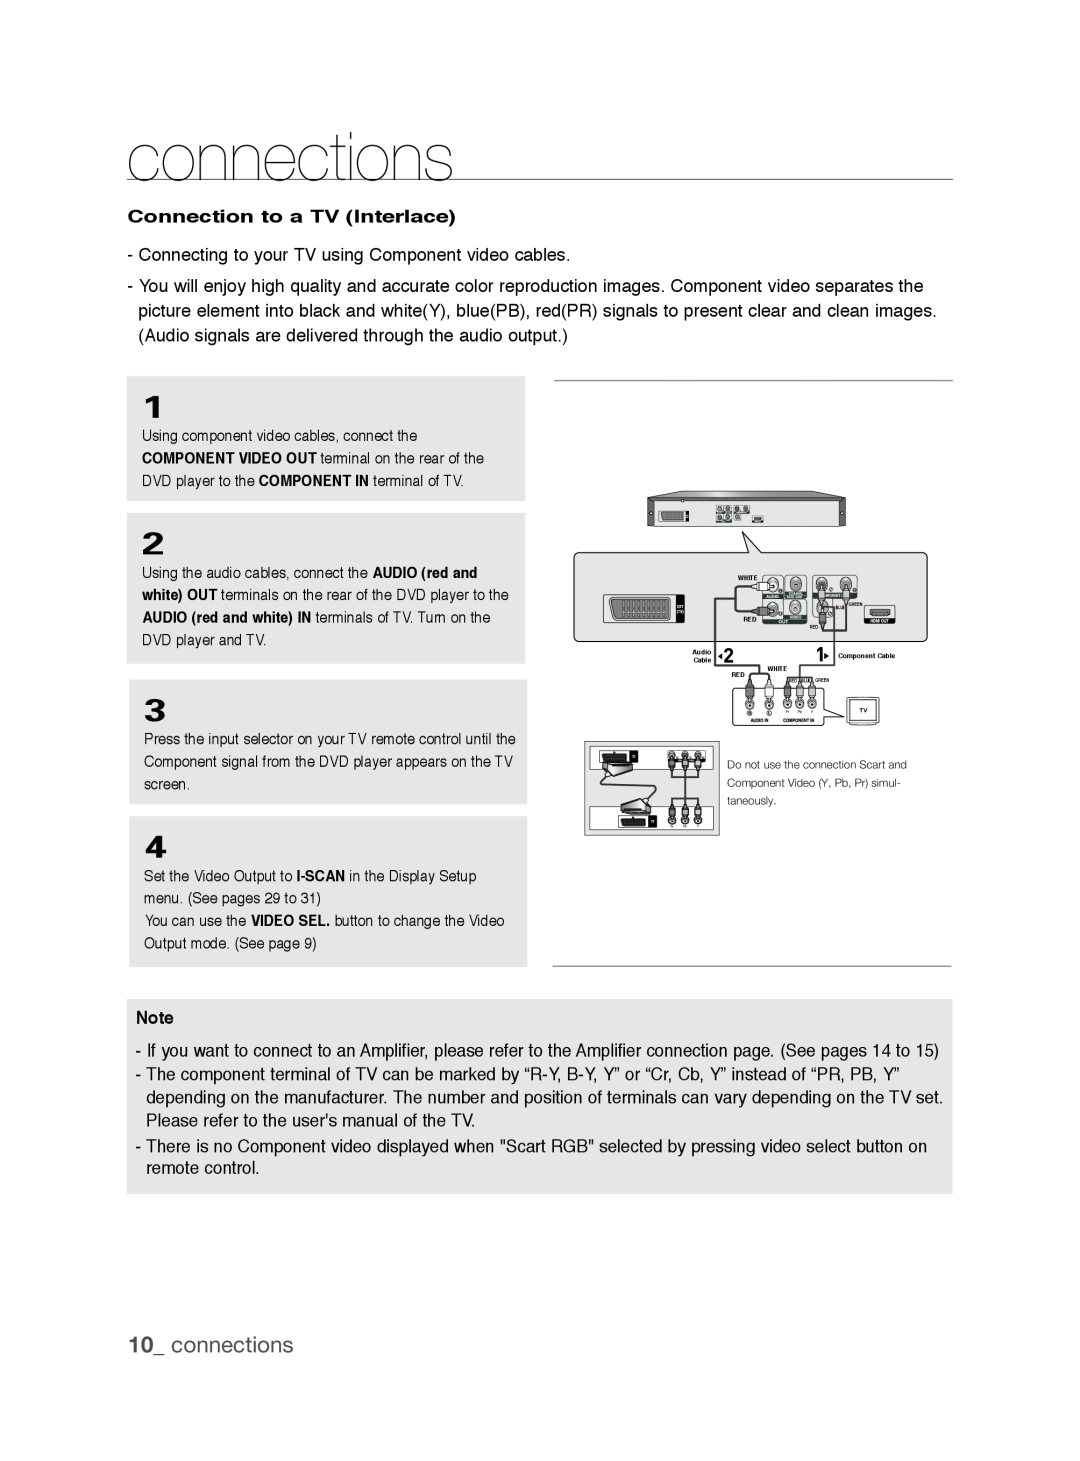 Samsung DVD-1080P9/EDC, DVD-1080AV/XEG, DVD-1080P9/XEL, DVD-1080P9/XET manual connections, Connection to a TV Interlace 